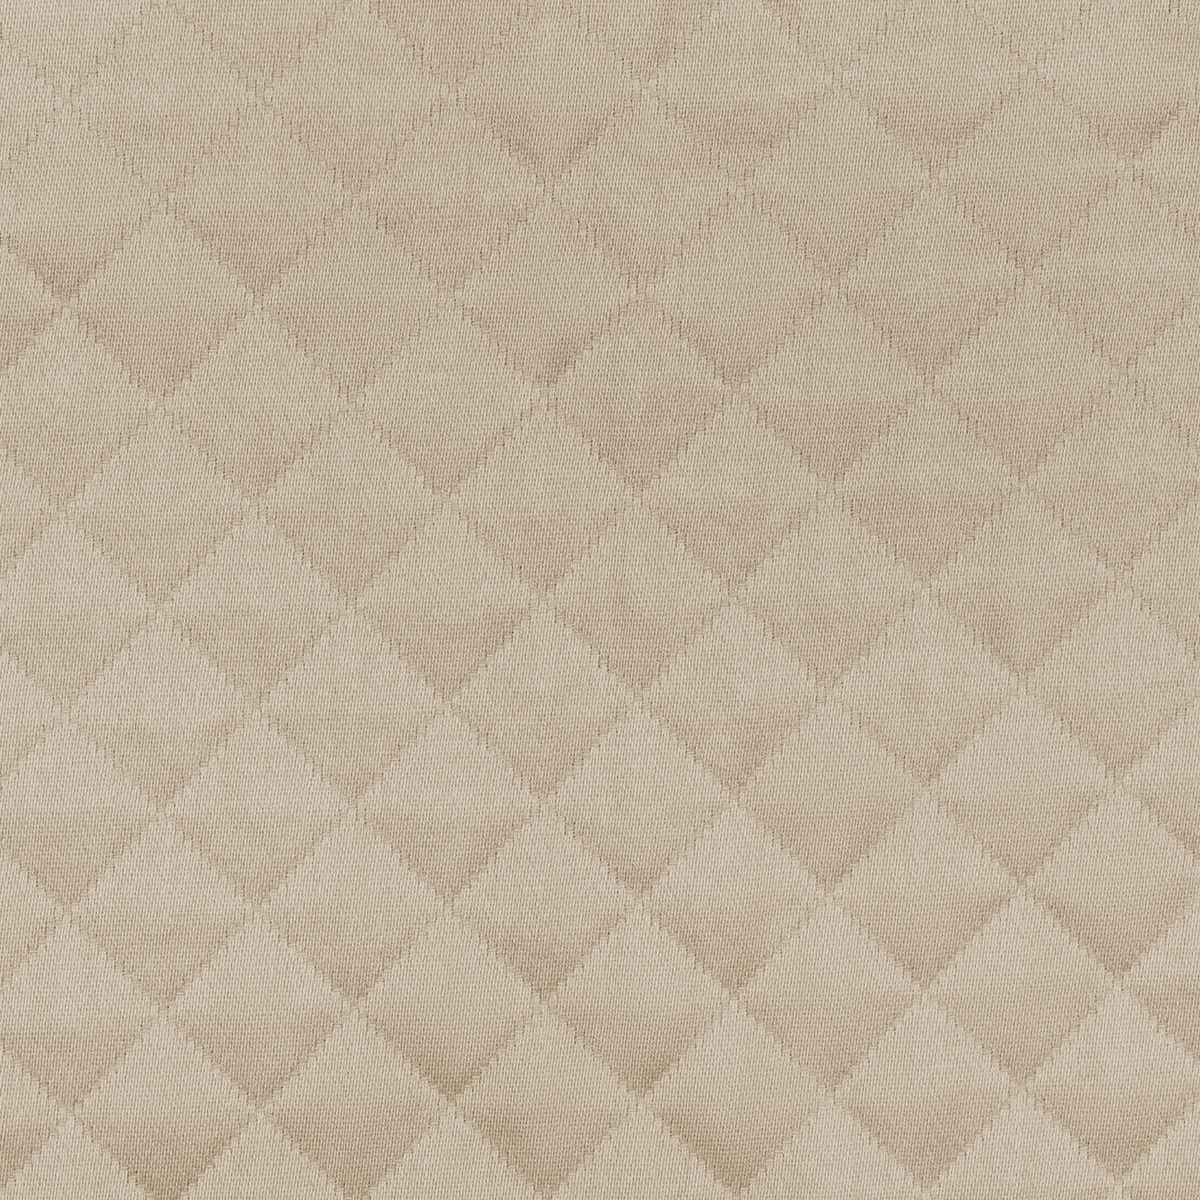 Closeup of Matouk Petra Bedding’s Fabric in Color Dune